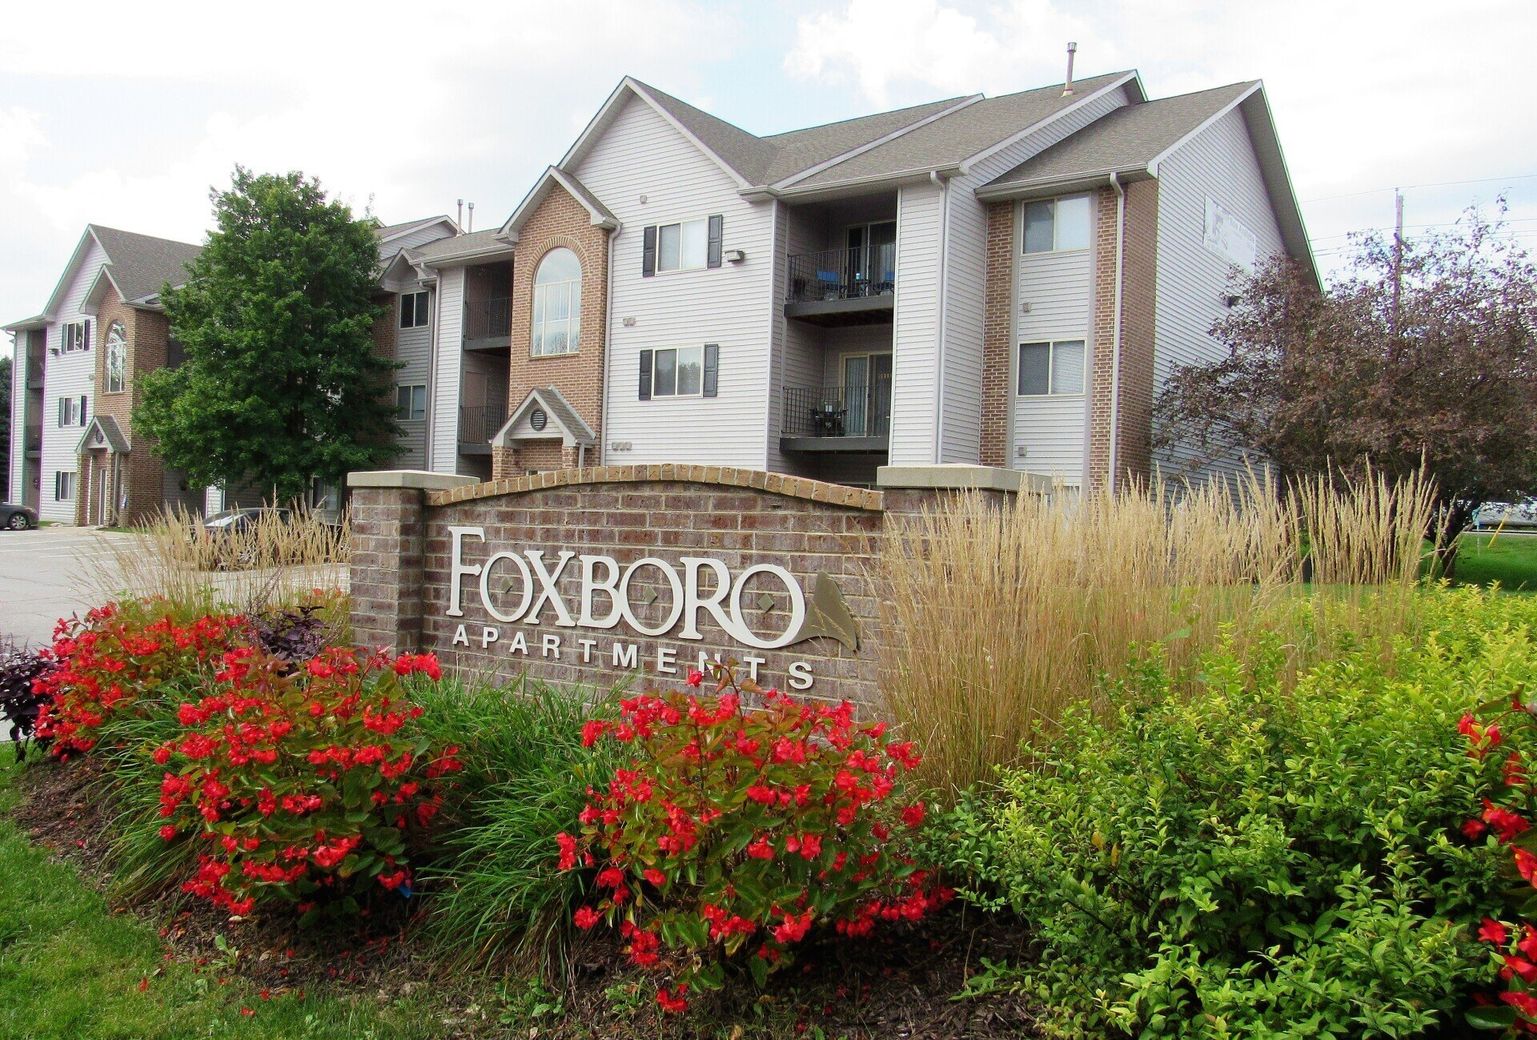 Foxboro Apartments photo